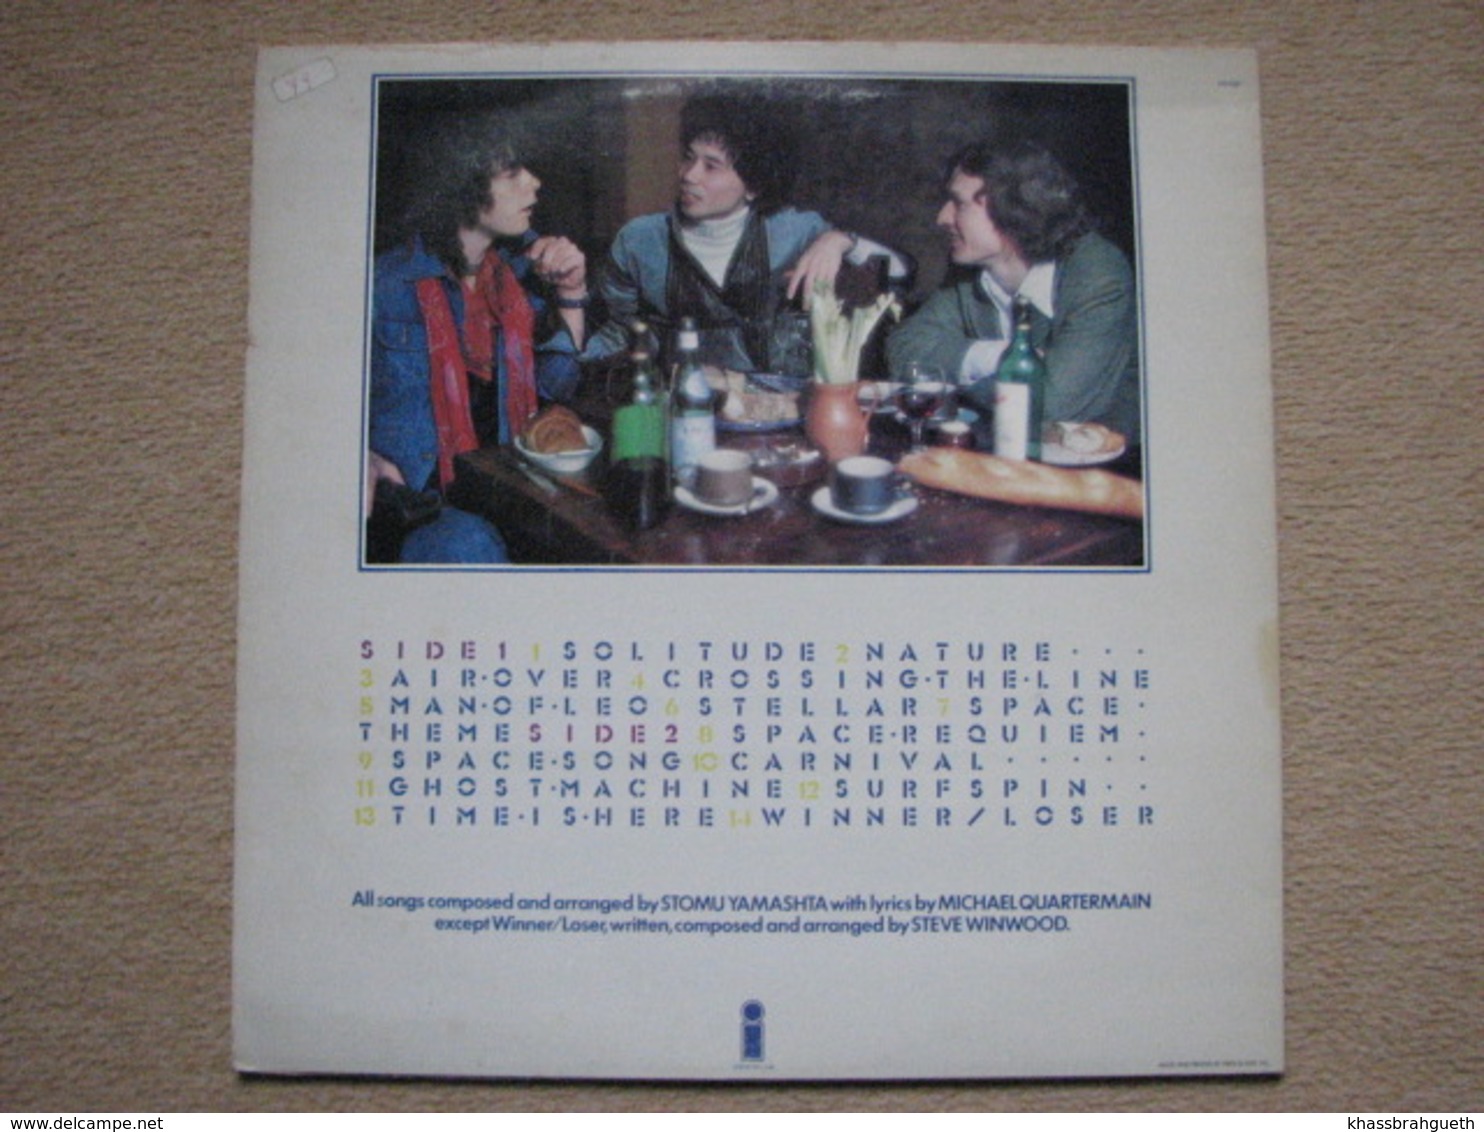 STOMU YAMASHTA STEVE WINWOOD MICHAEL SCHRIEVE - GO (LP) (ISLAND 1976) - Rock